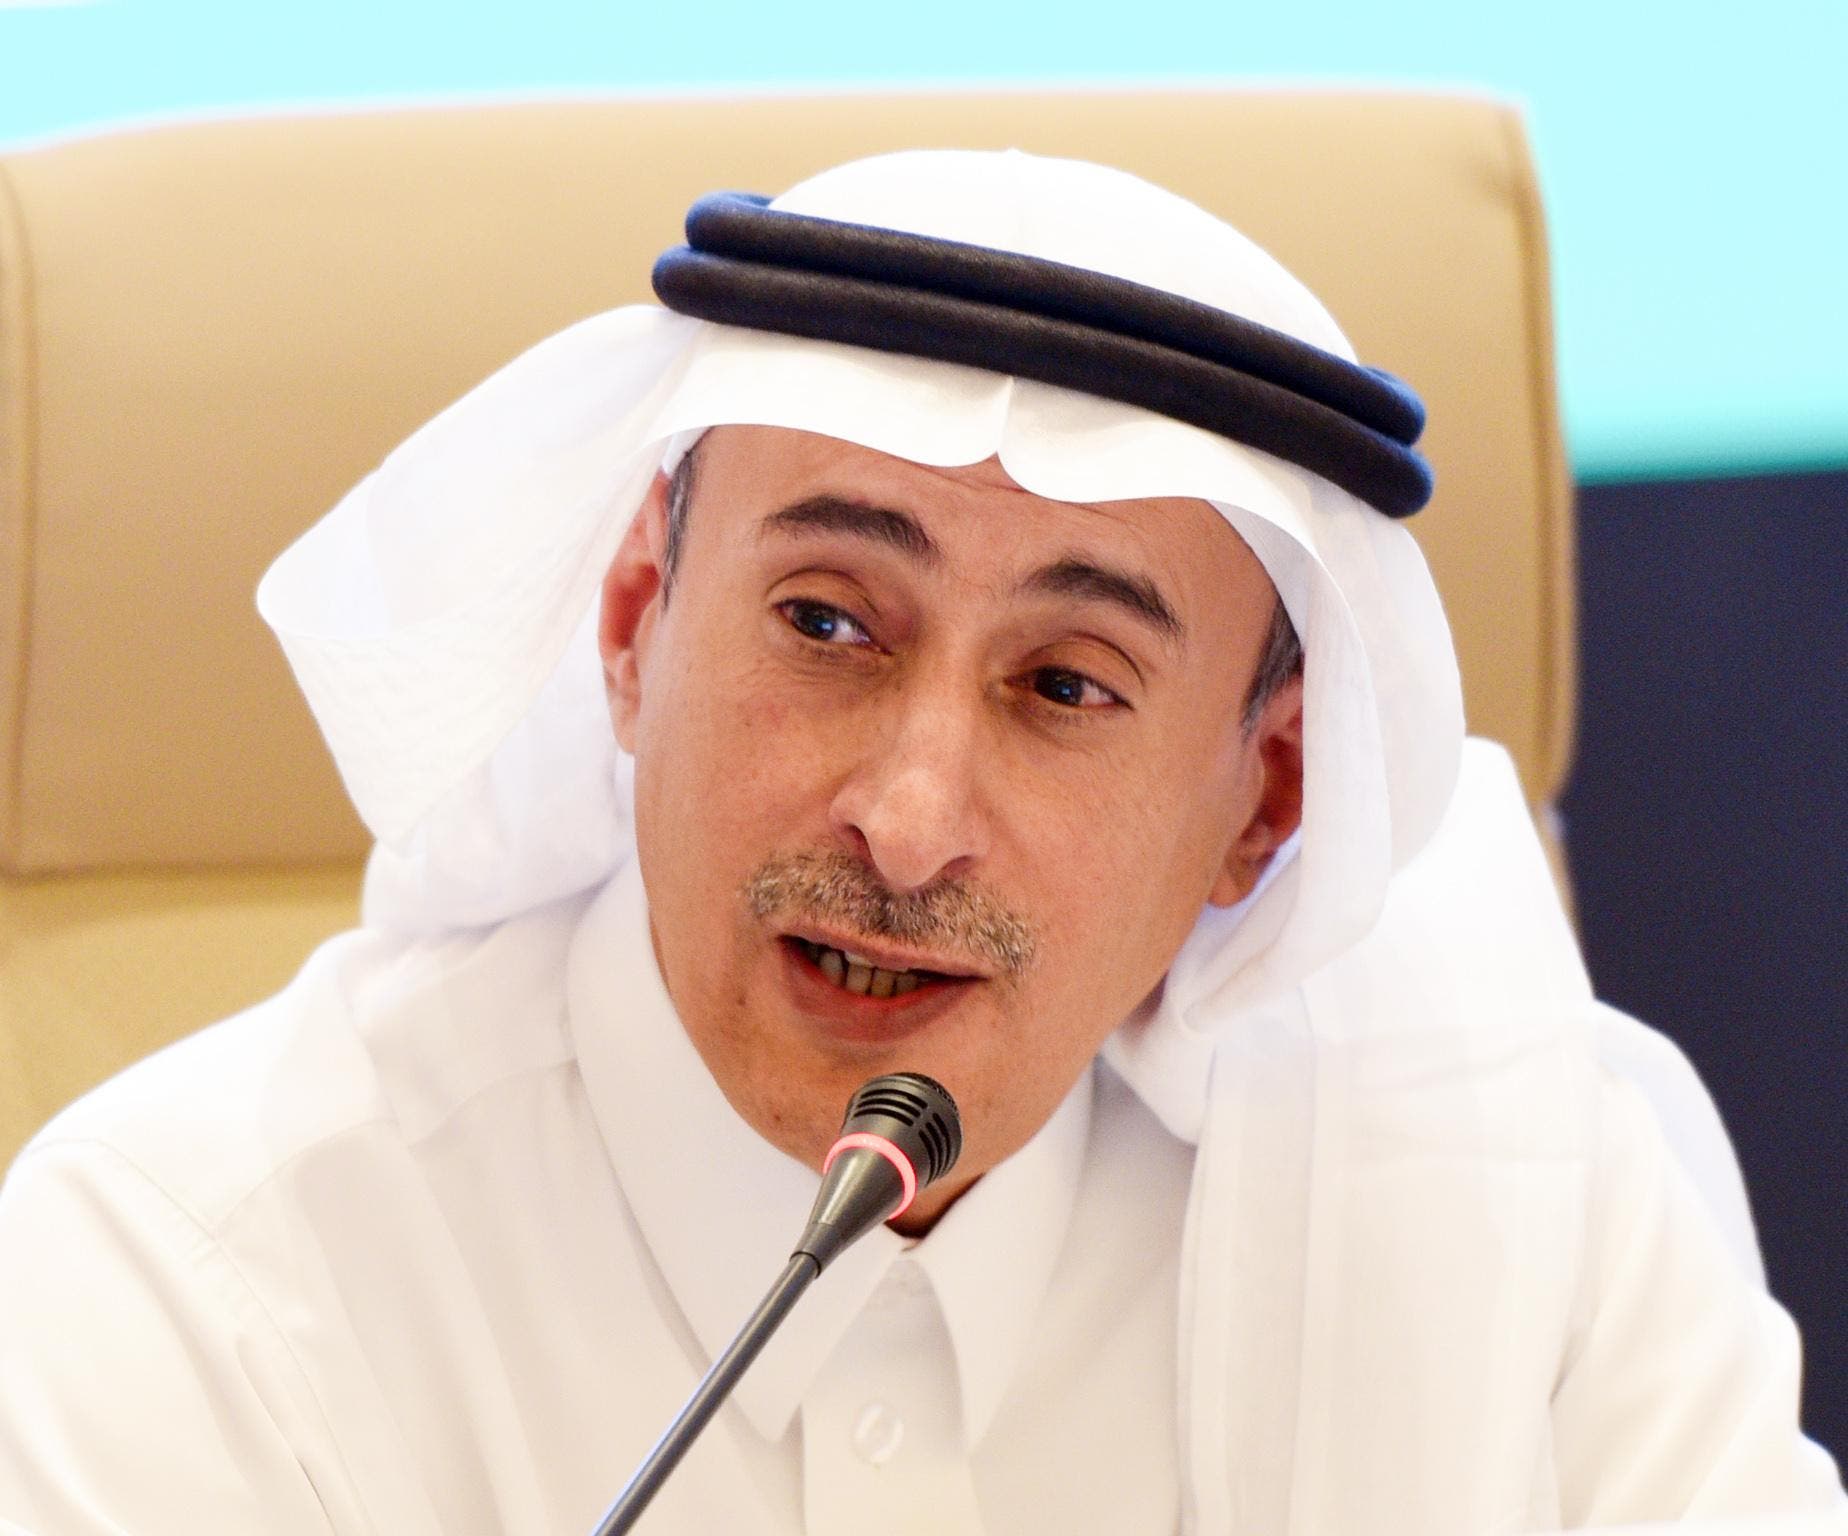 Dr. Fahed al sultan saudi peace forum (Supplied)